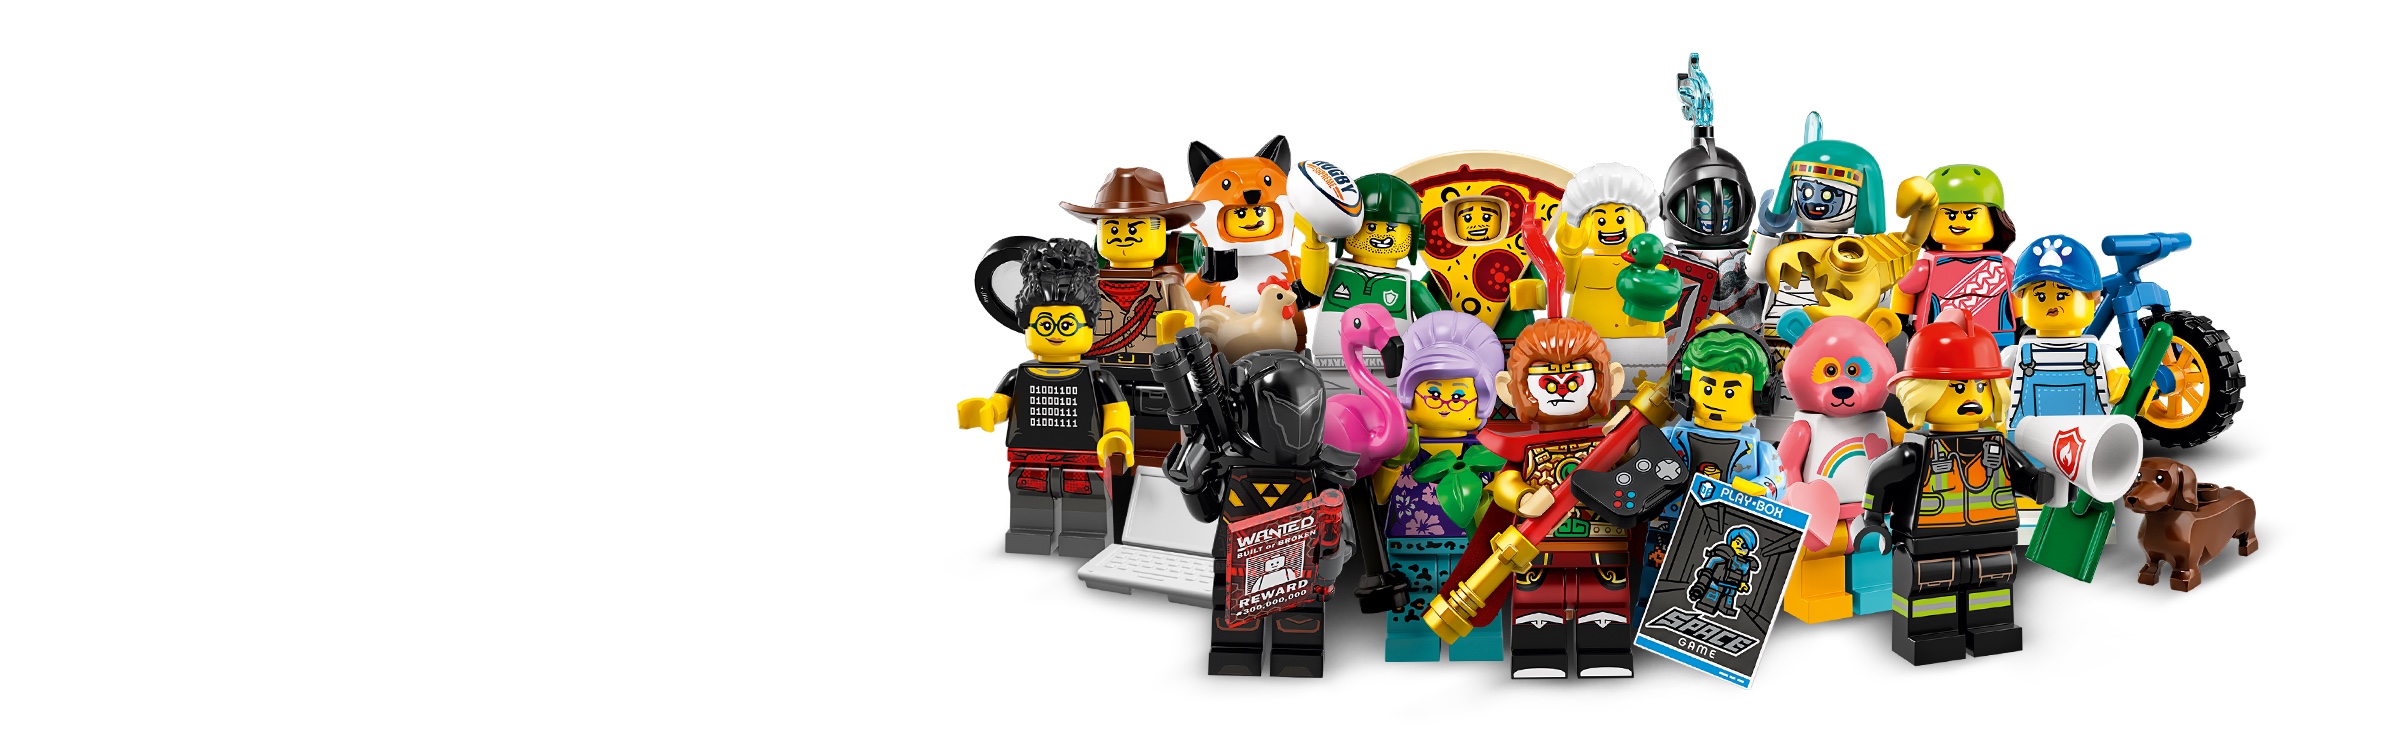 71025 Lego Series 19 Minifigures Building Kit for sale online 